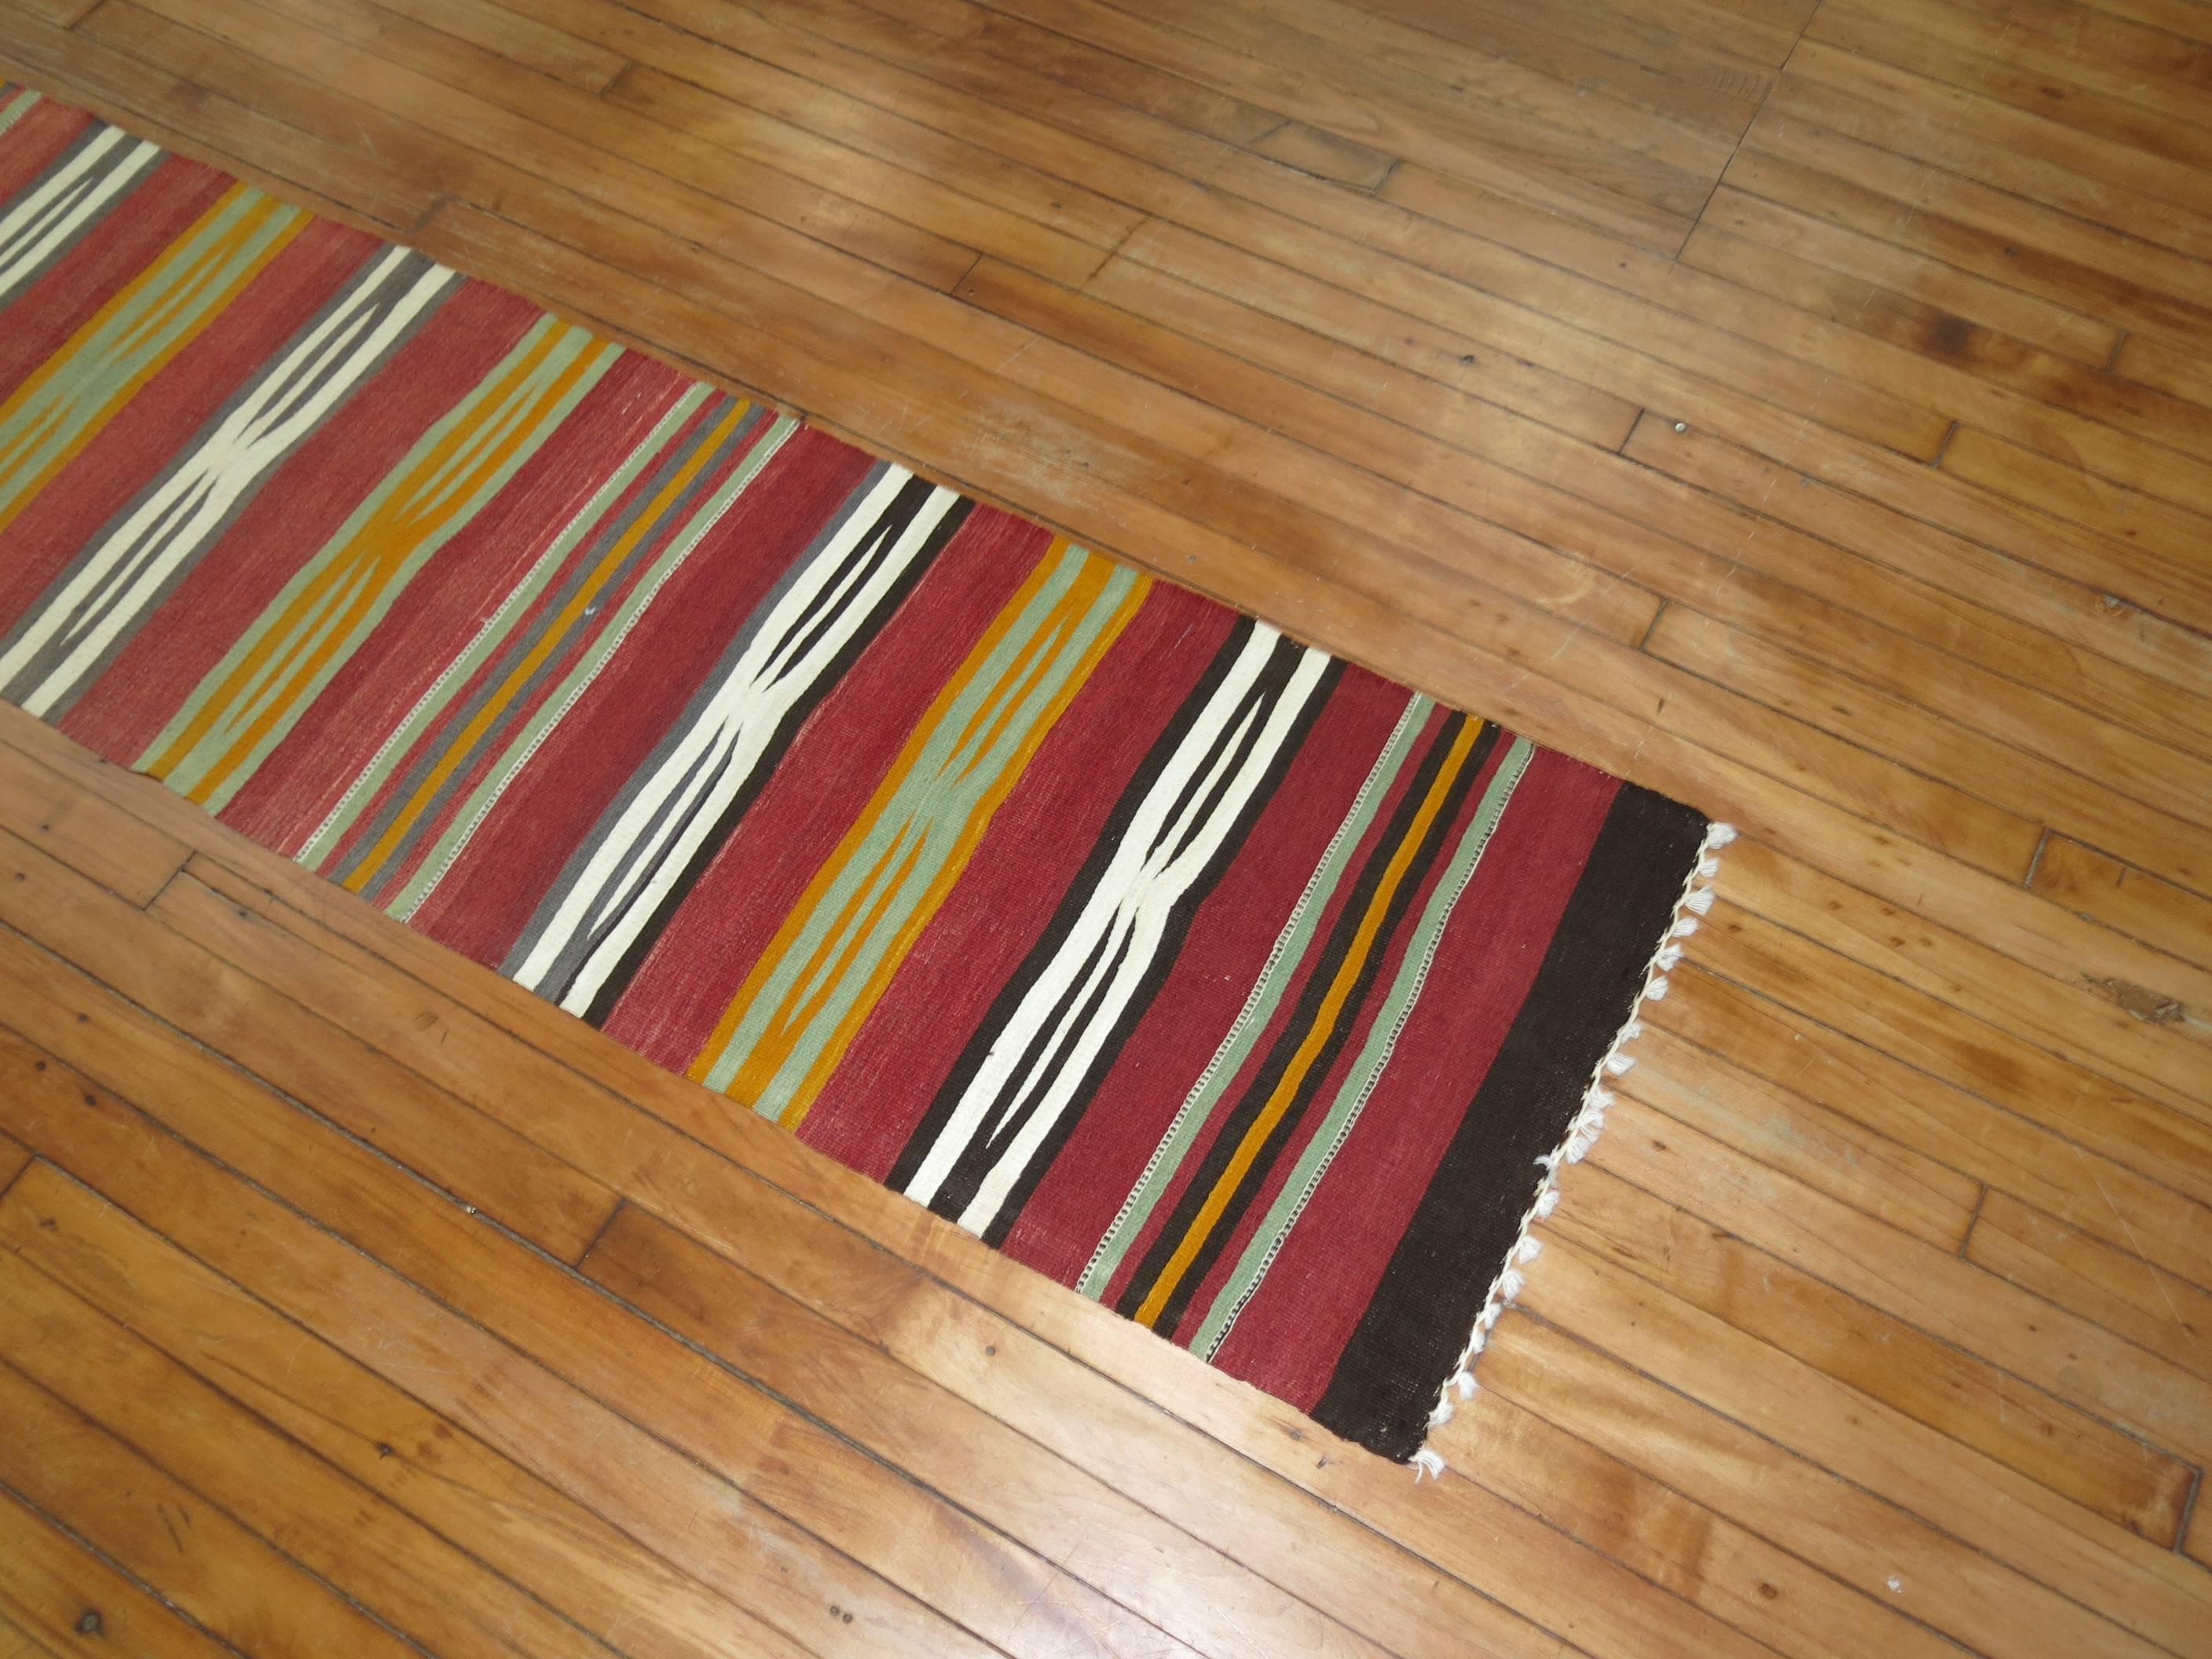 kilim runner rugs